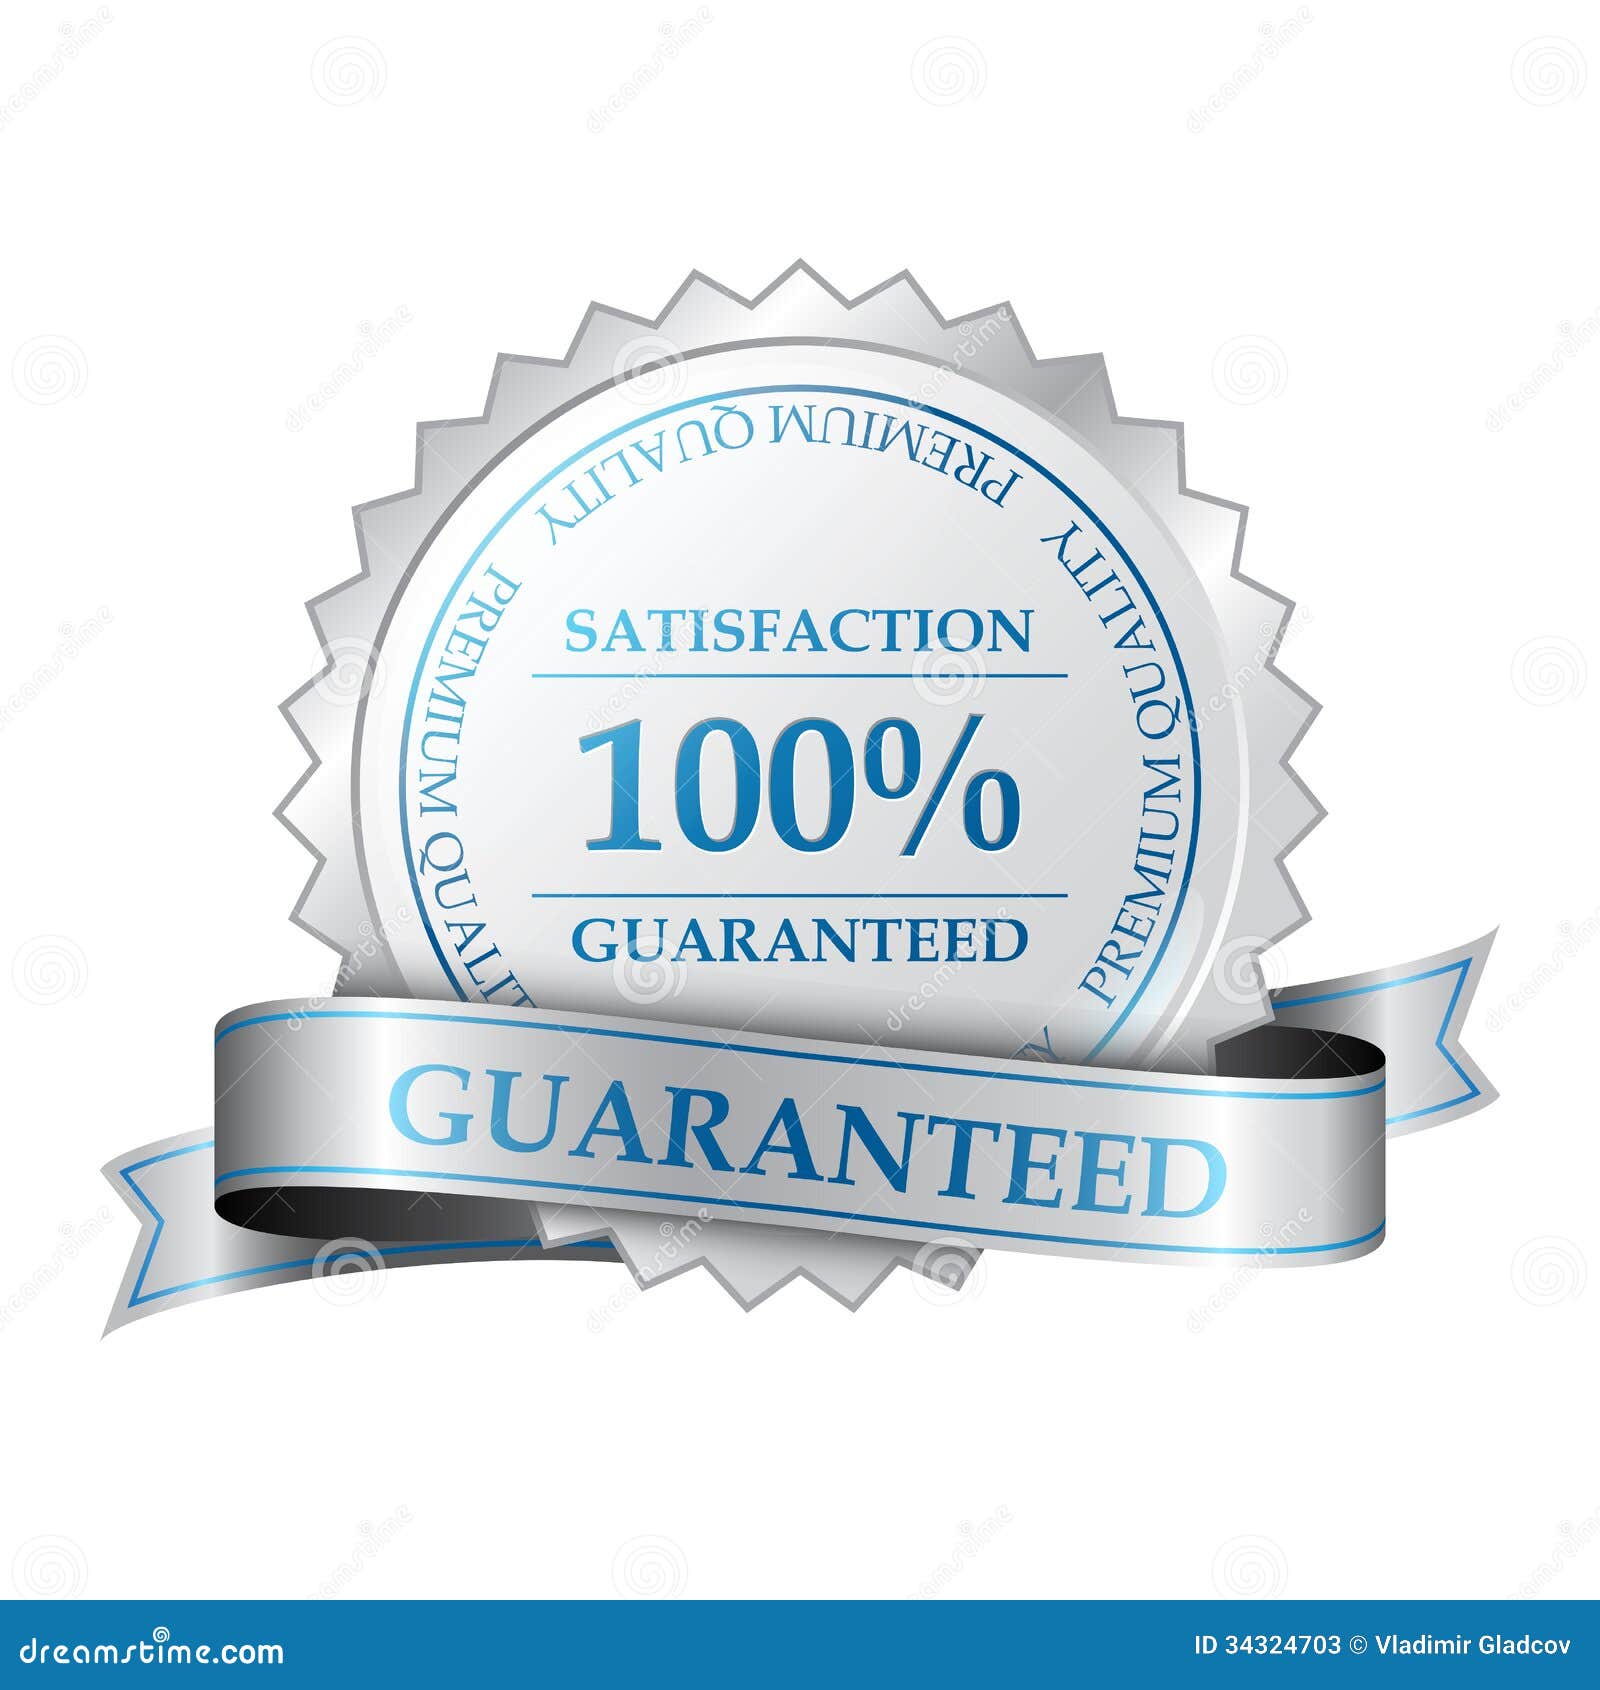 premium 100% satisfaction guarantee label